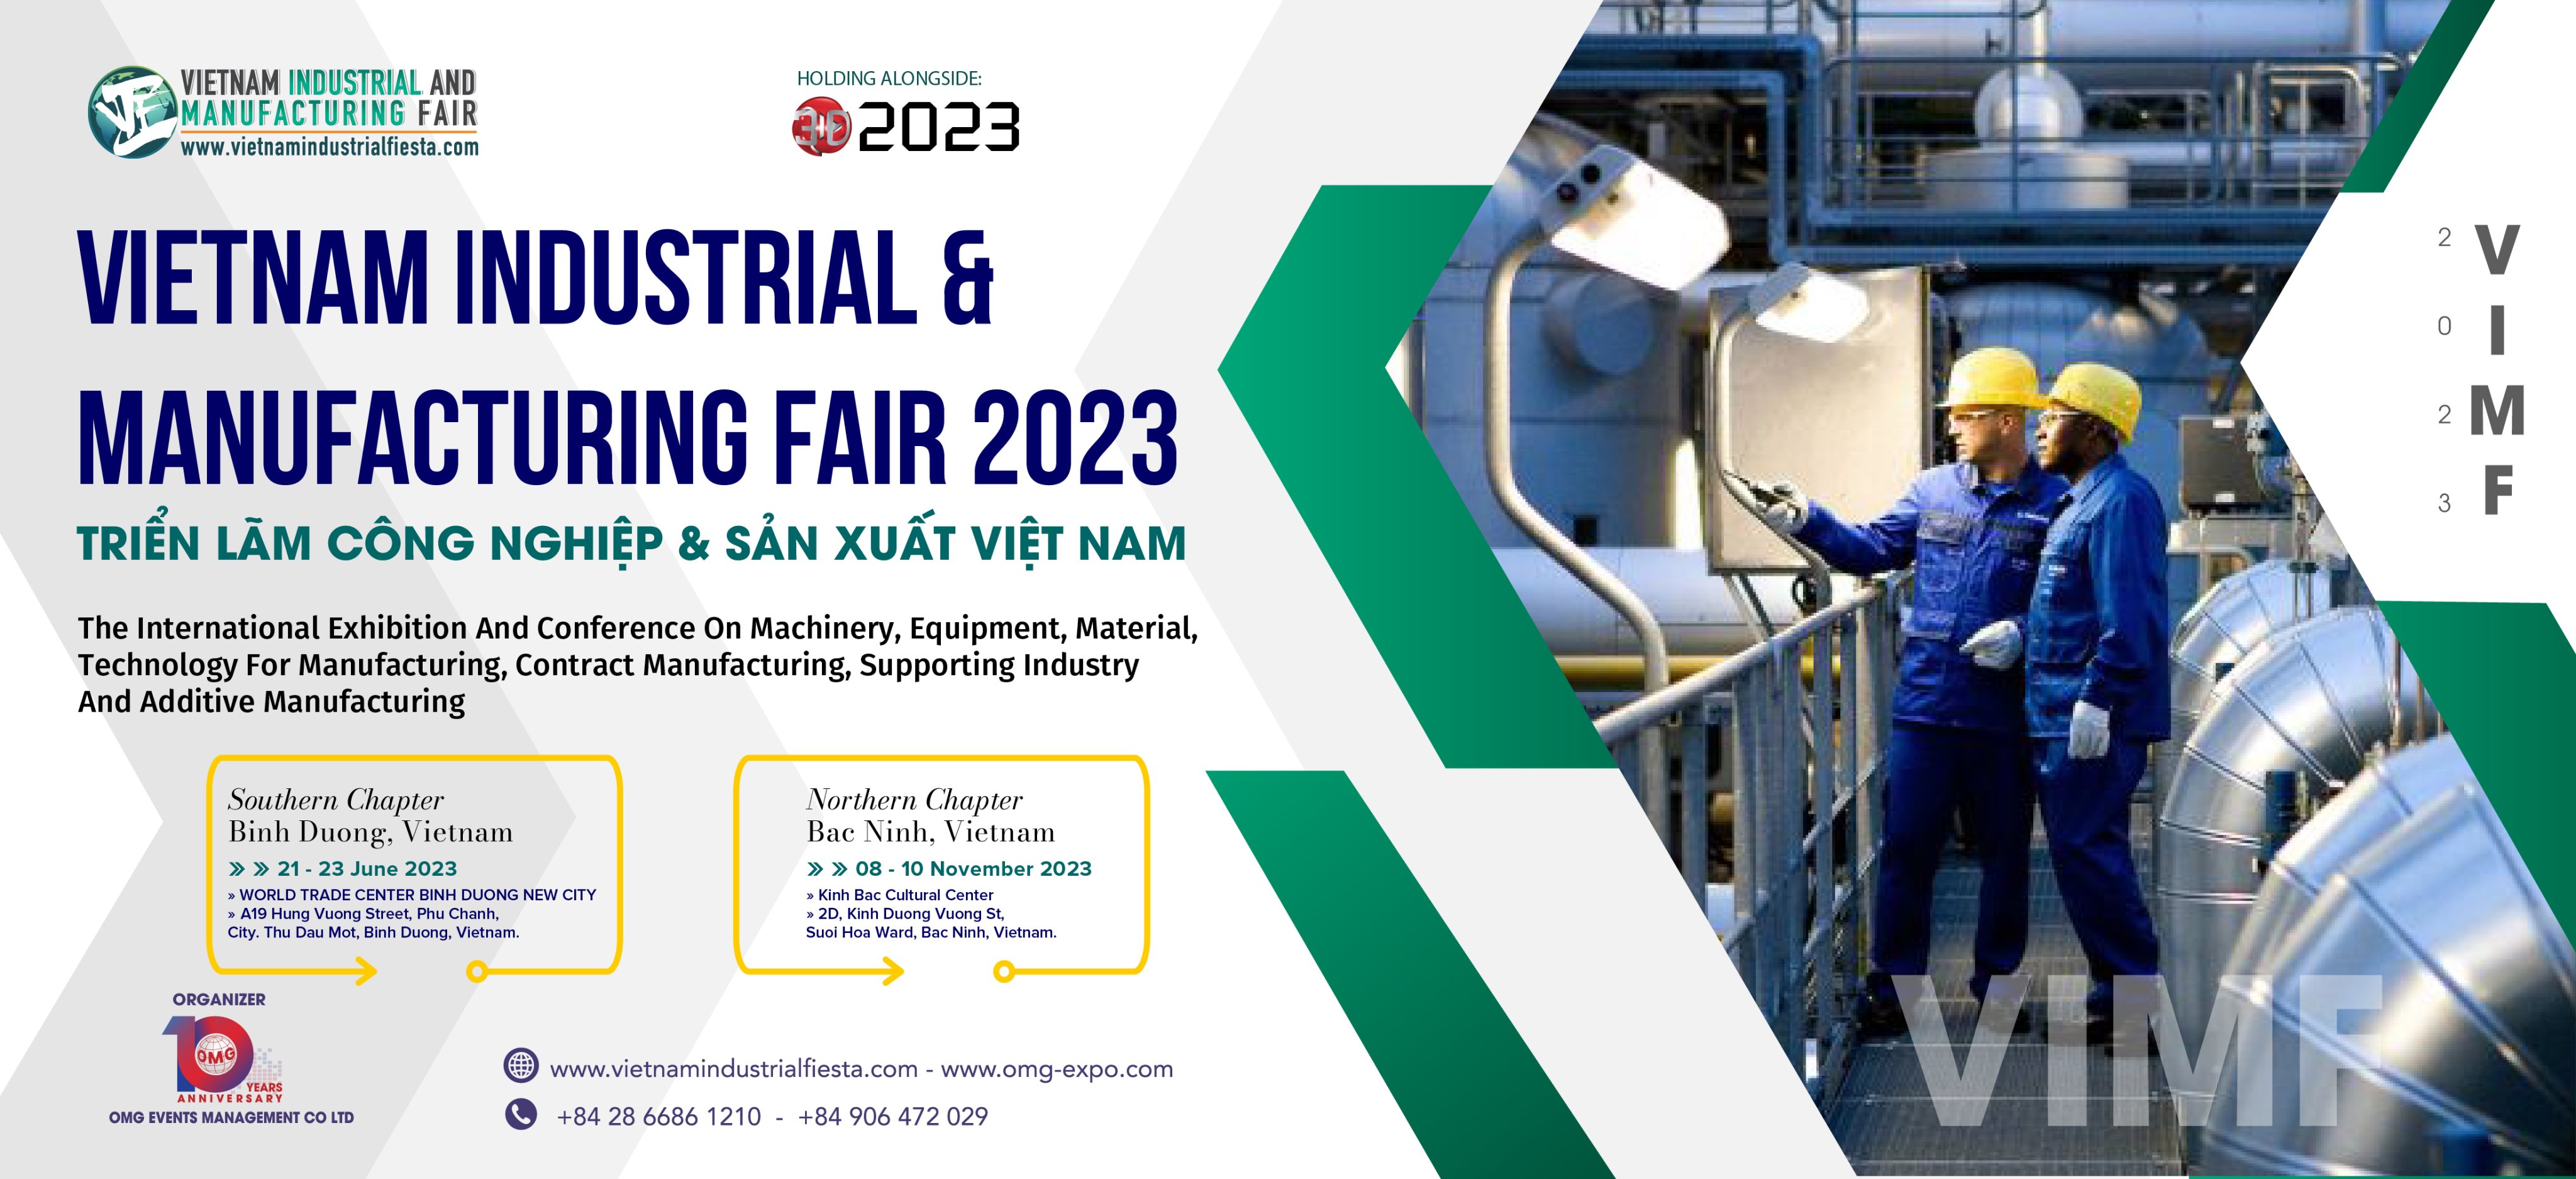 VIMF - VIETNAM INDUSTRIAL & MANUFACTURING FAIR 2023 BINH DUONG